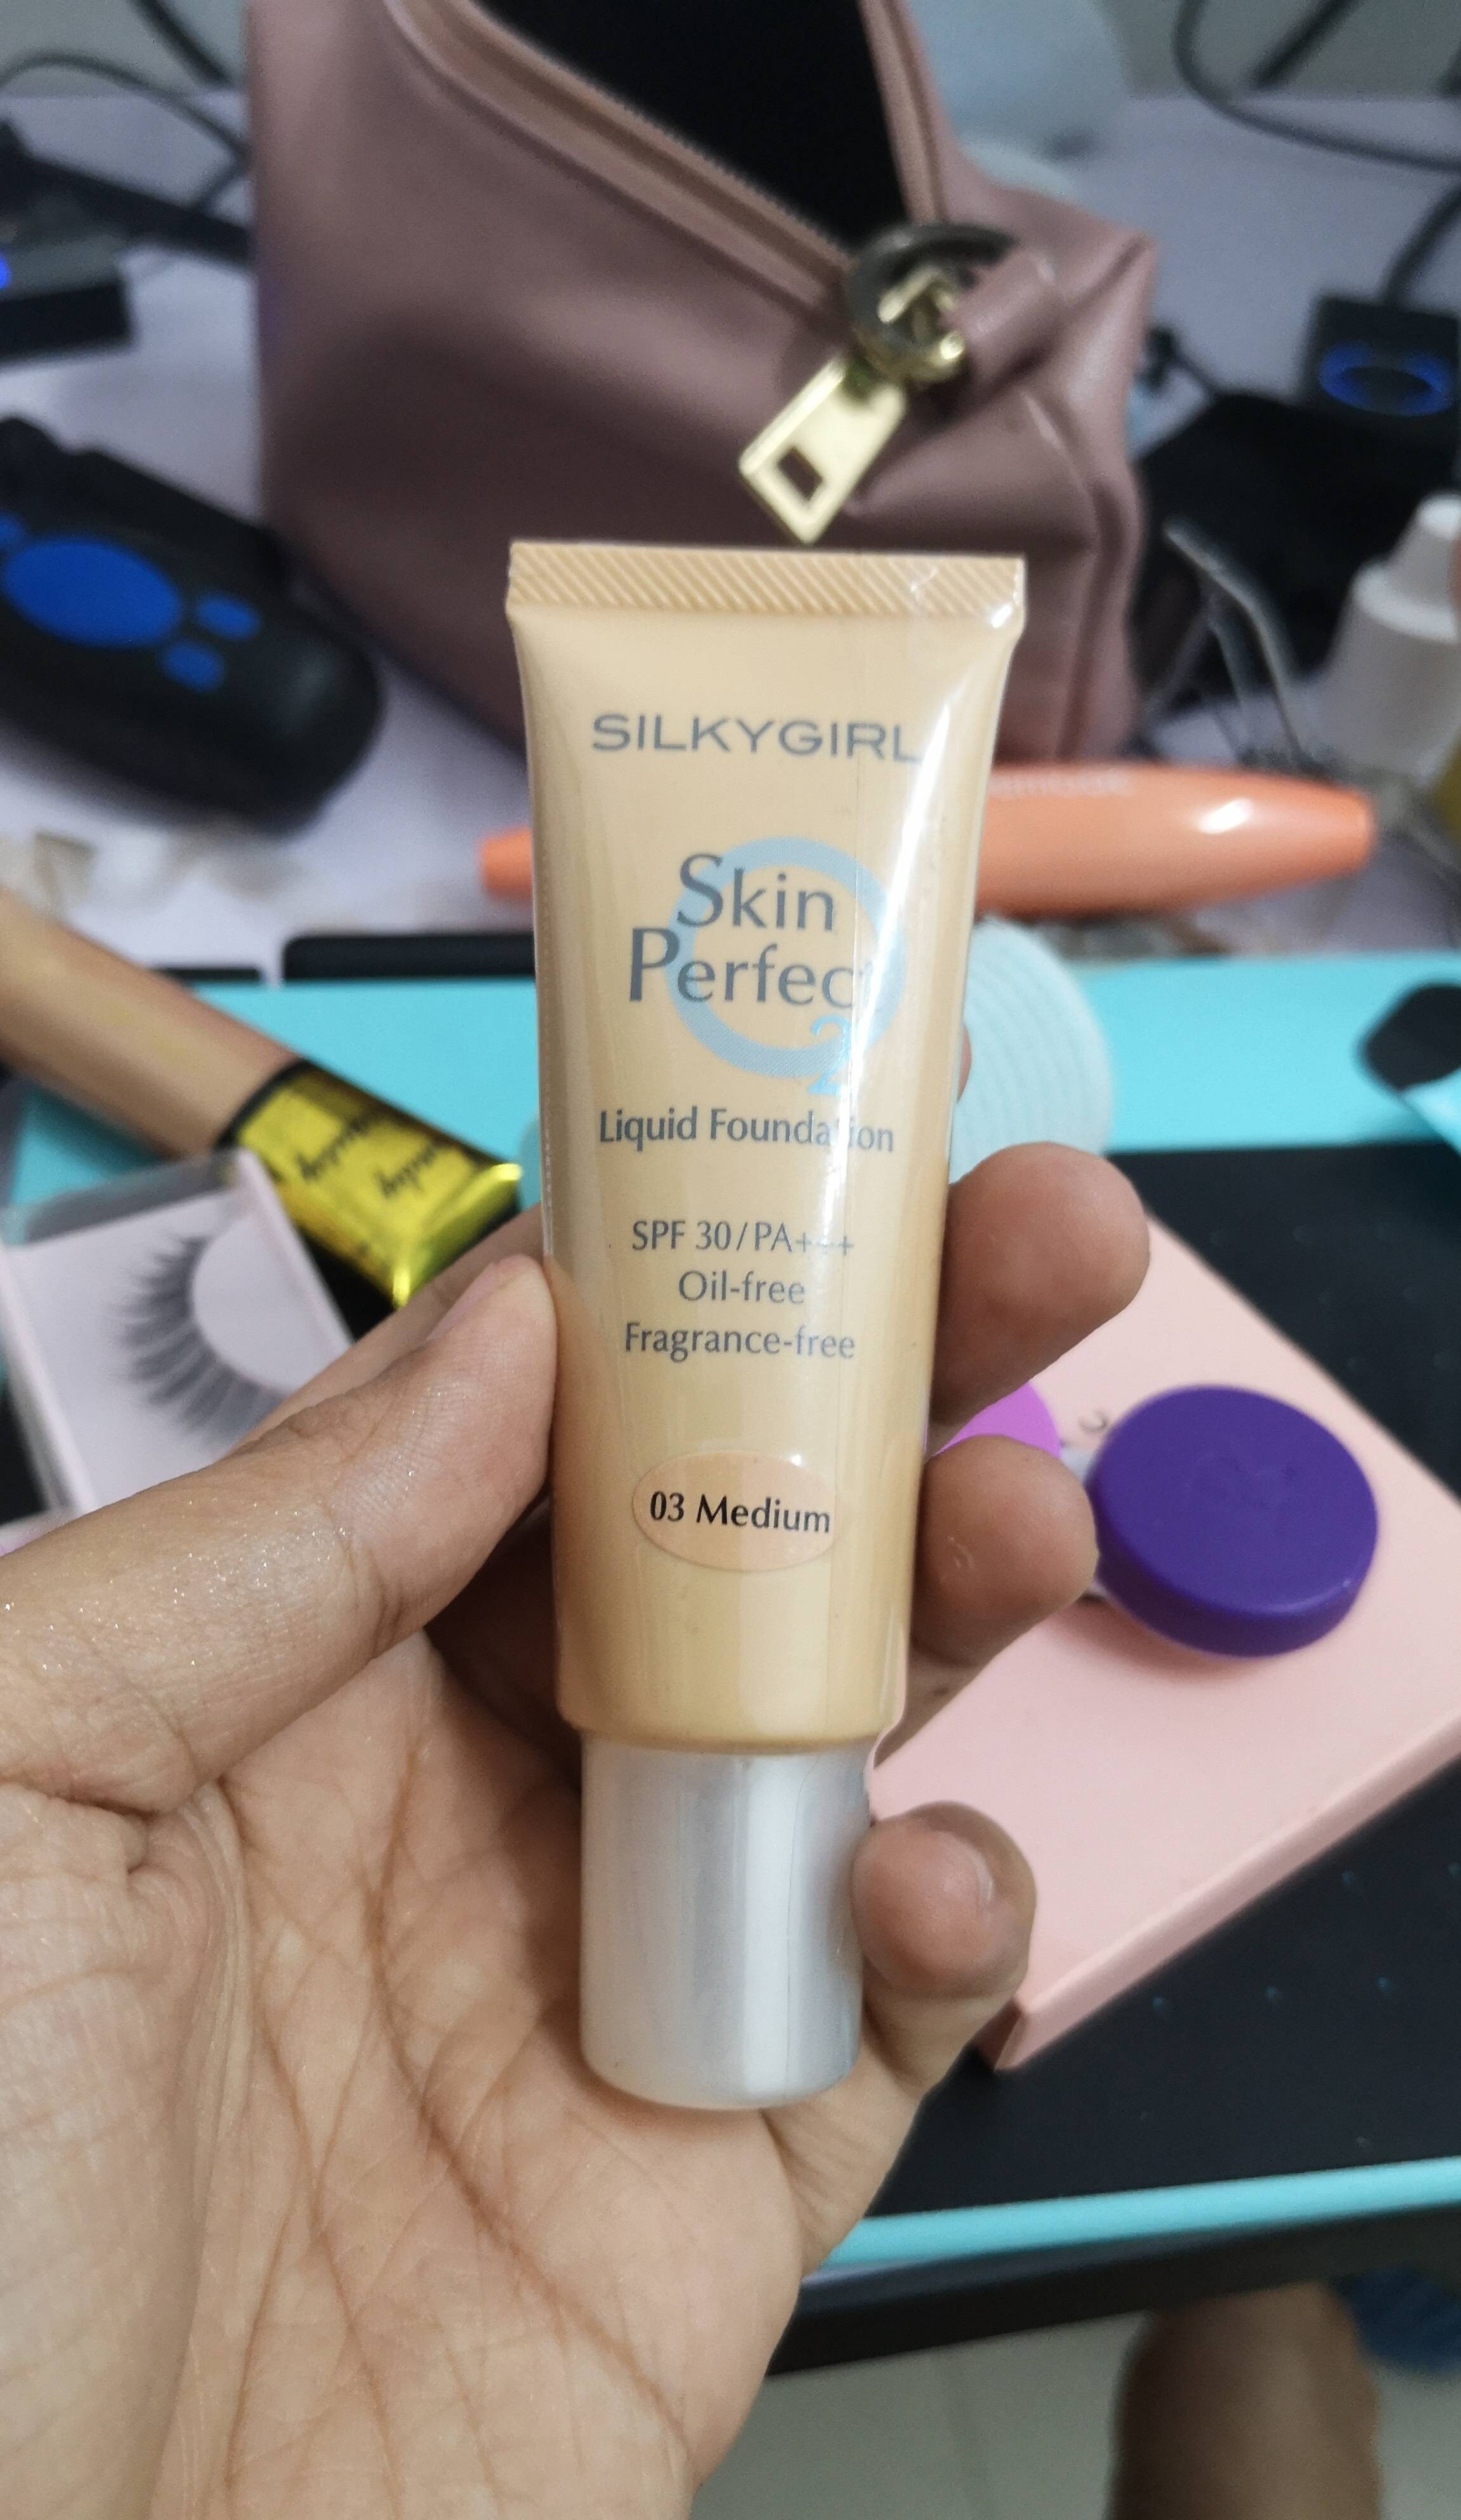 Silkygirl Skin Perfect Liquid Foundation - Продукт - en